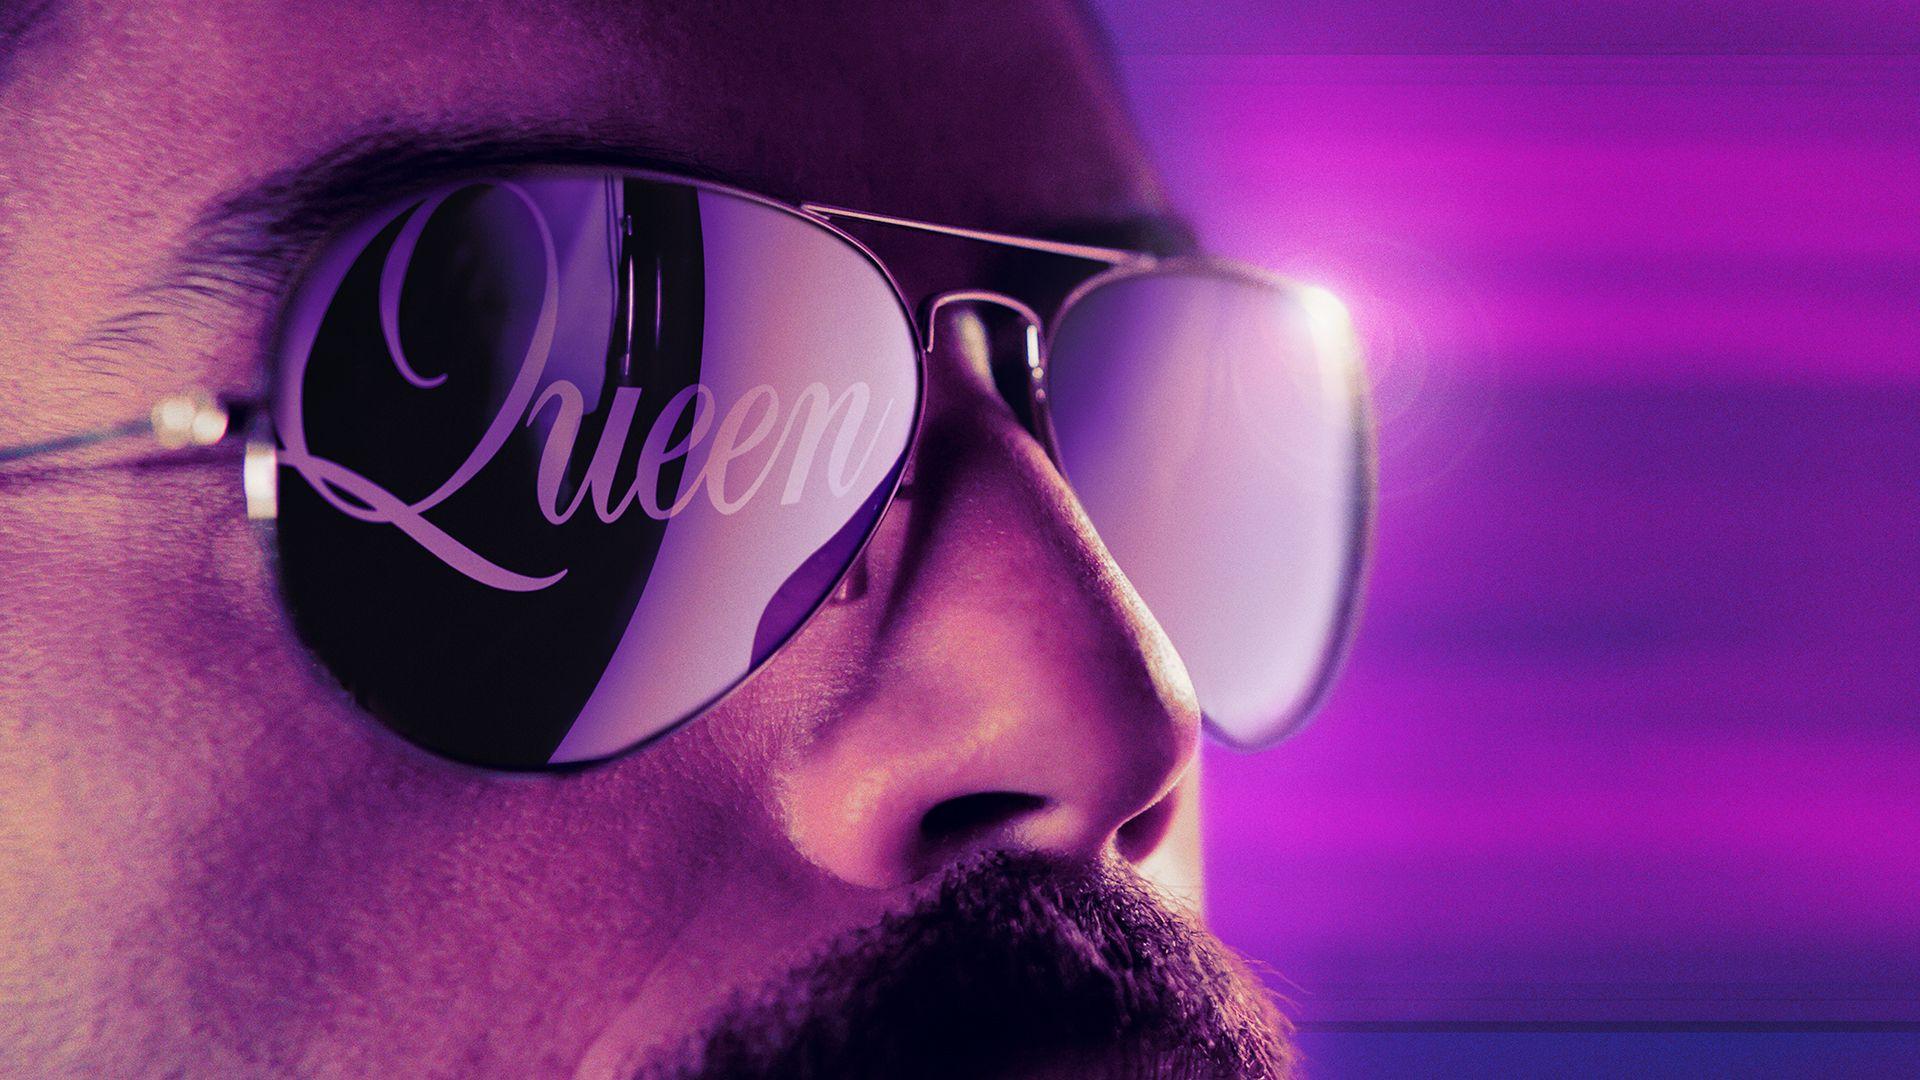 Bohemian Rhapsody Movie Wallpapers - Top Free Bohemian Rhapsody Movie ...